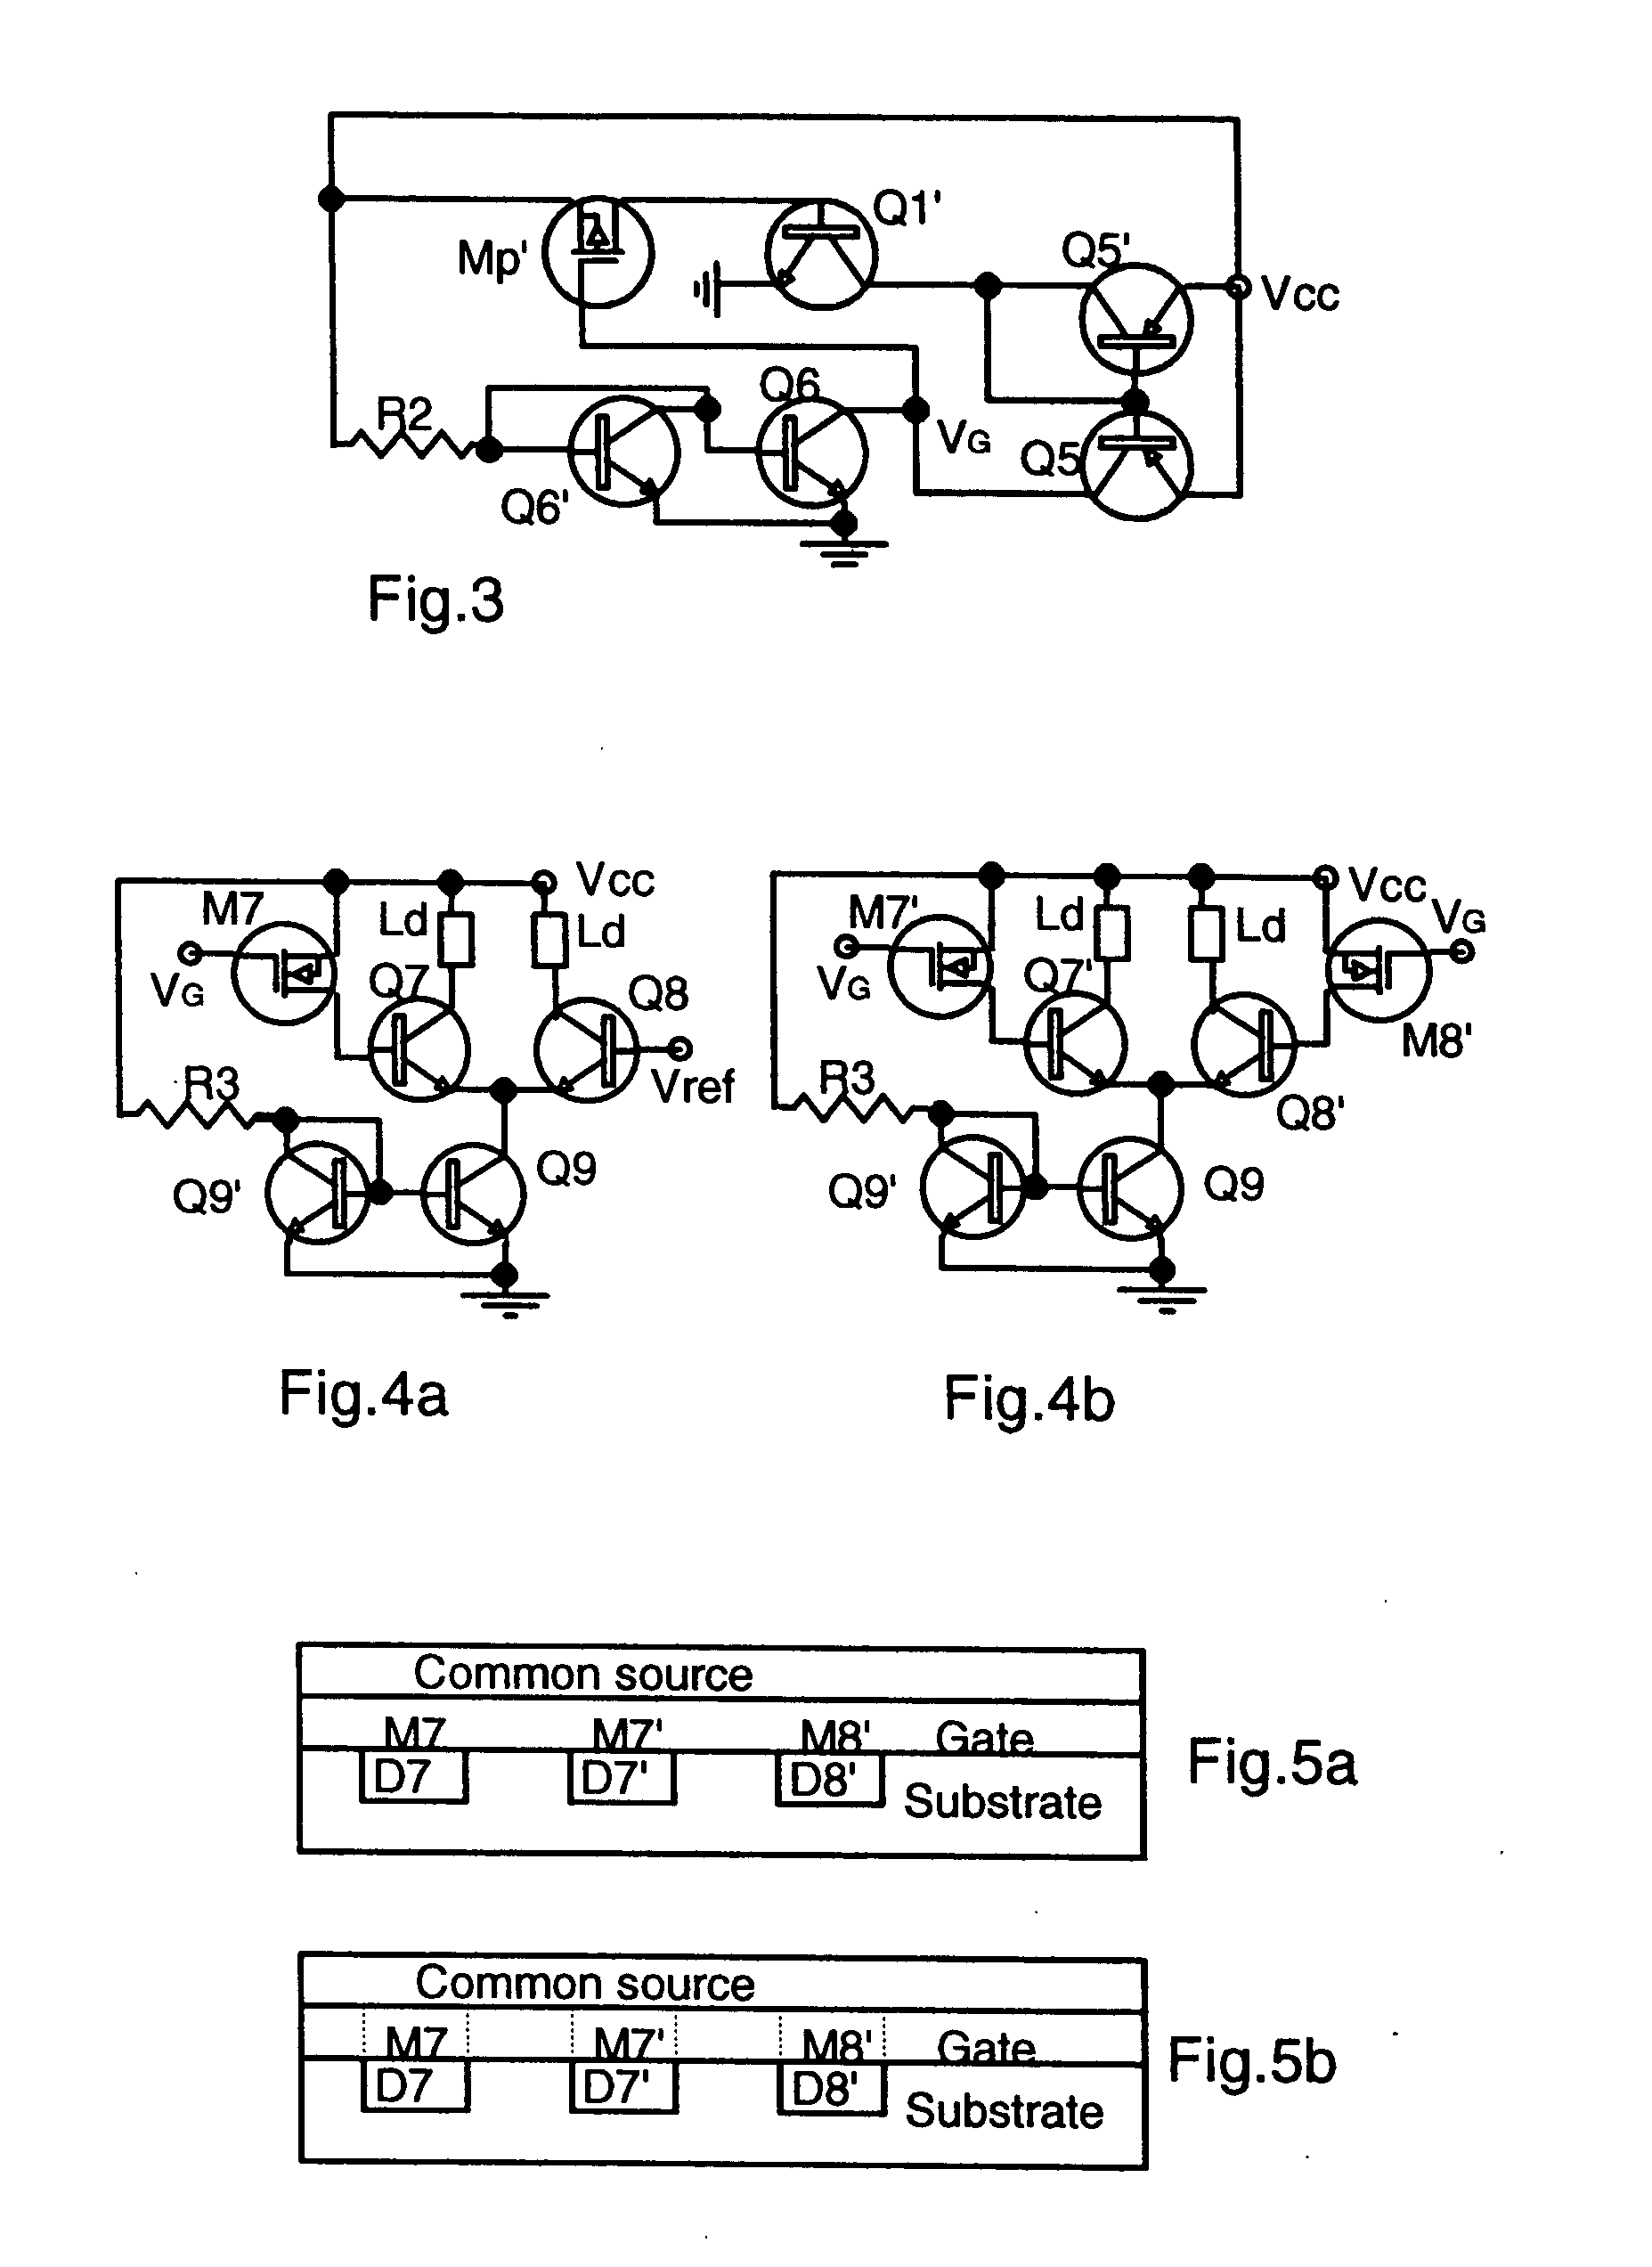 Adaptive mosfet resistor